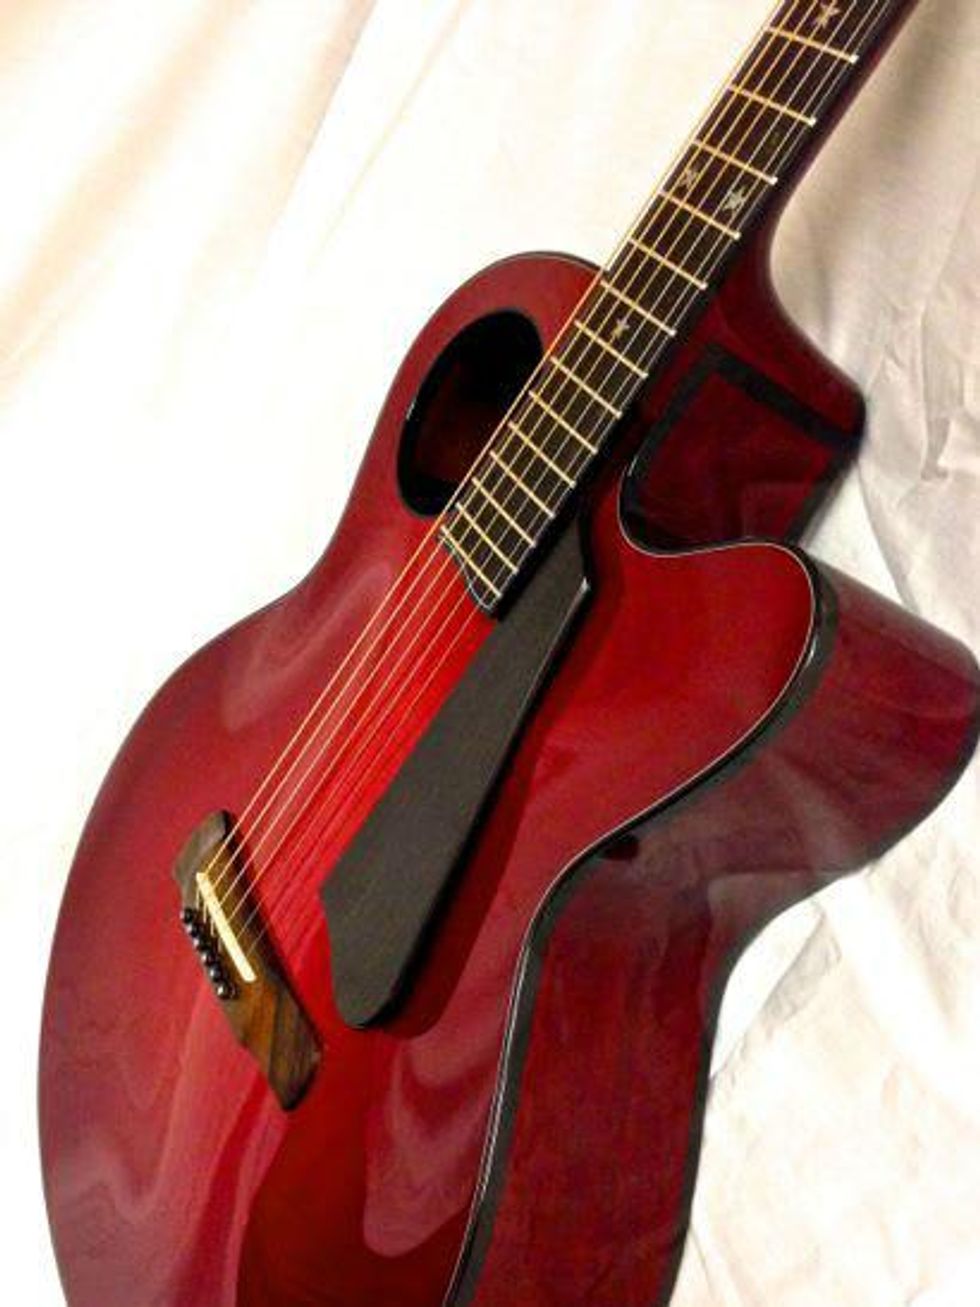 Zoltan David guitar for auction